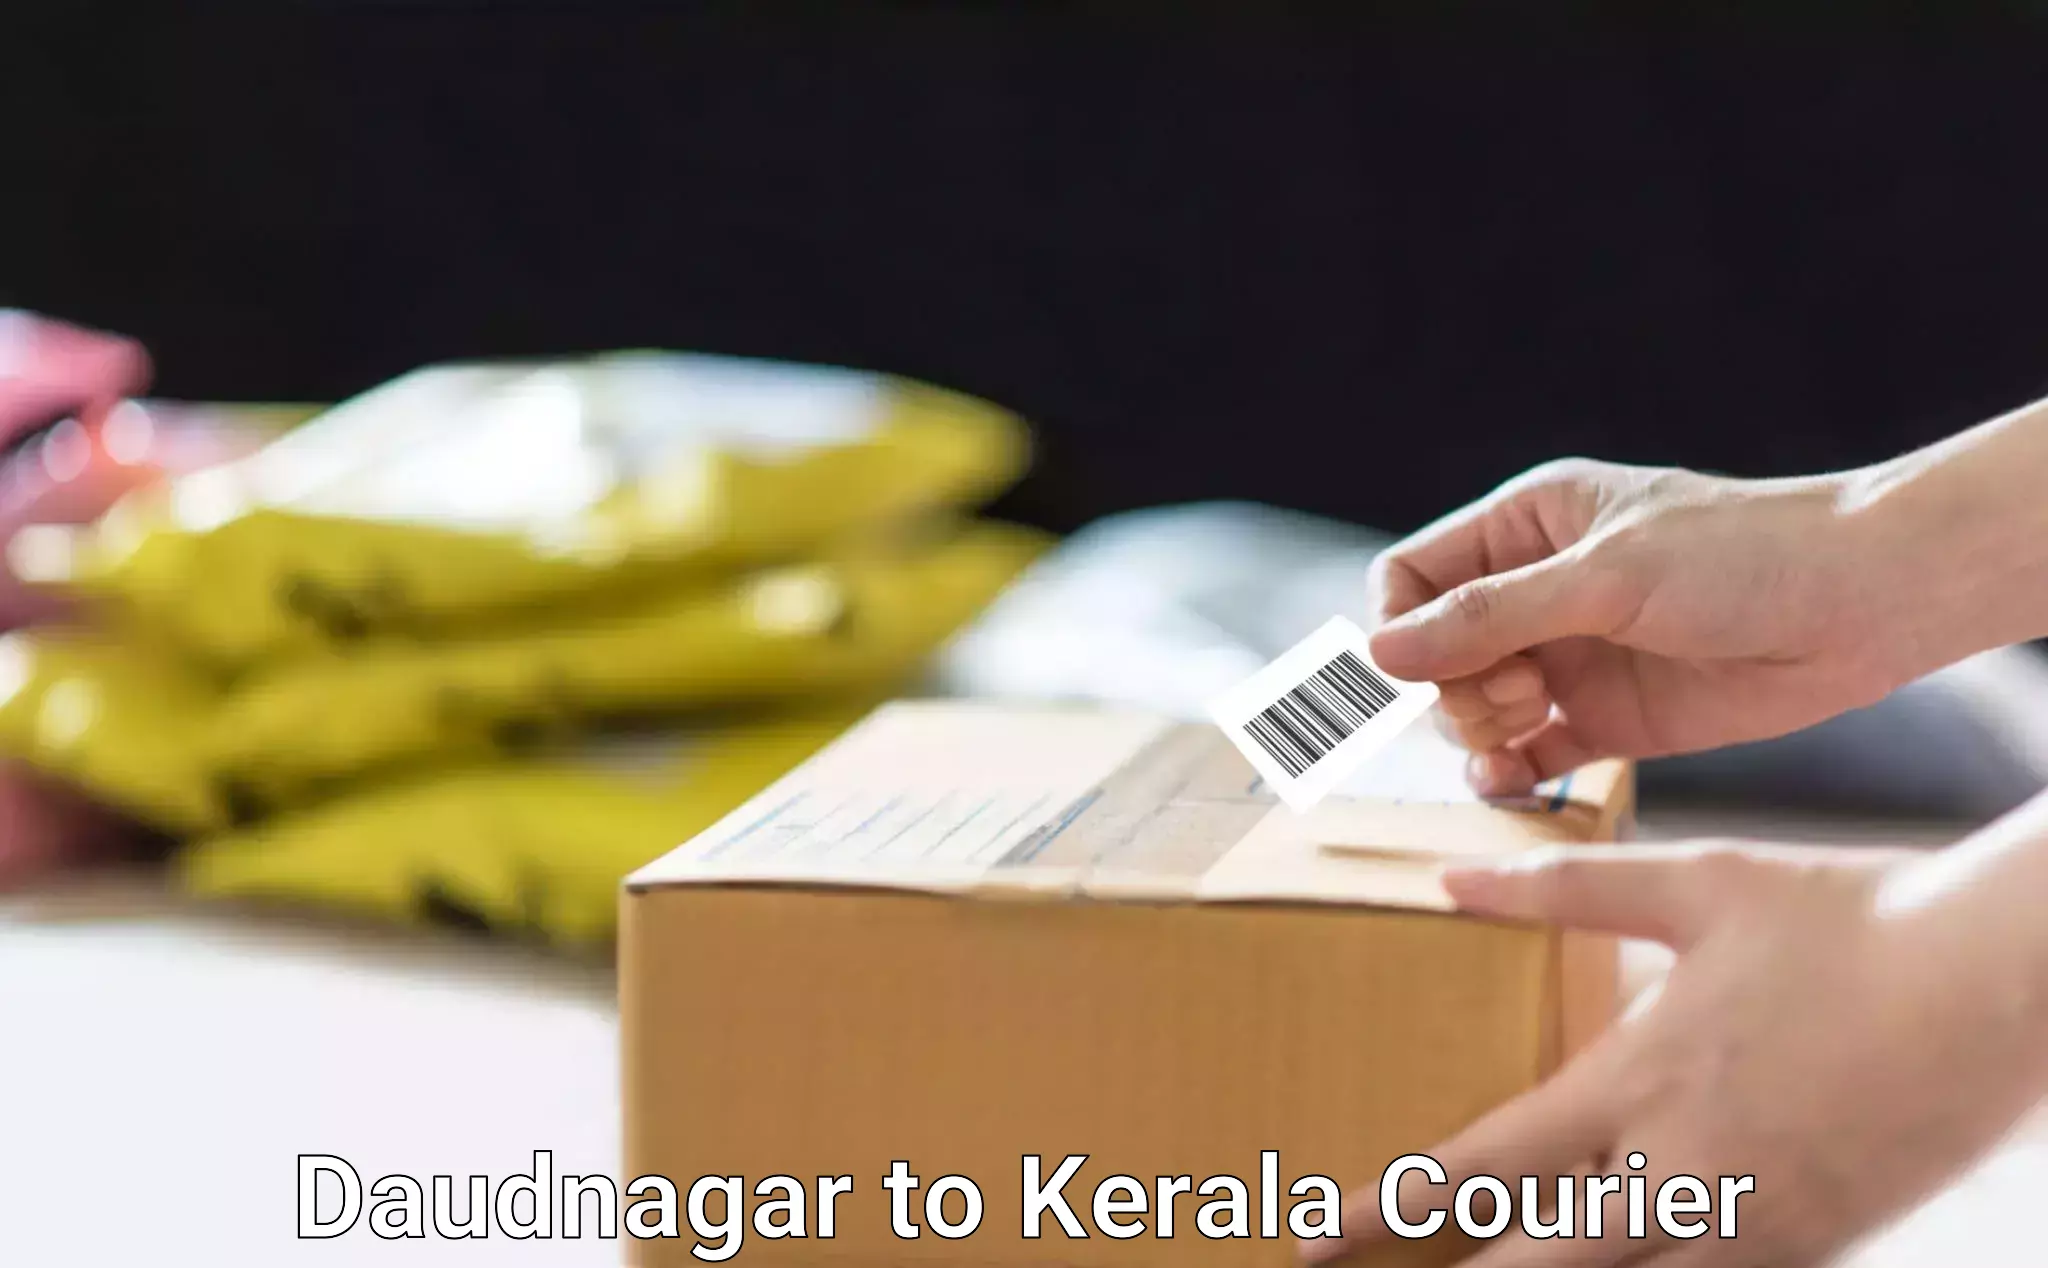 Professional relocation services Daudnagar to Kerala